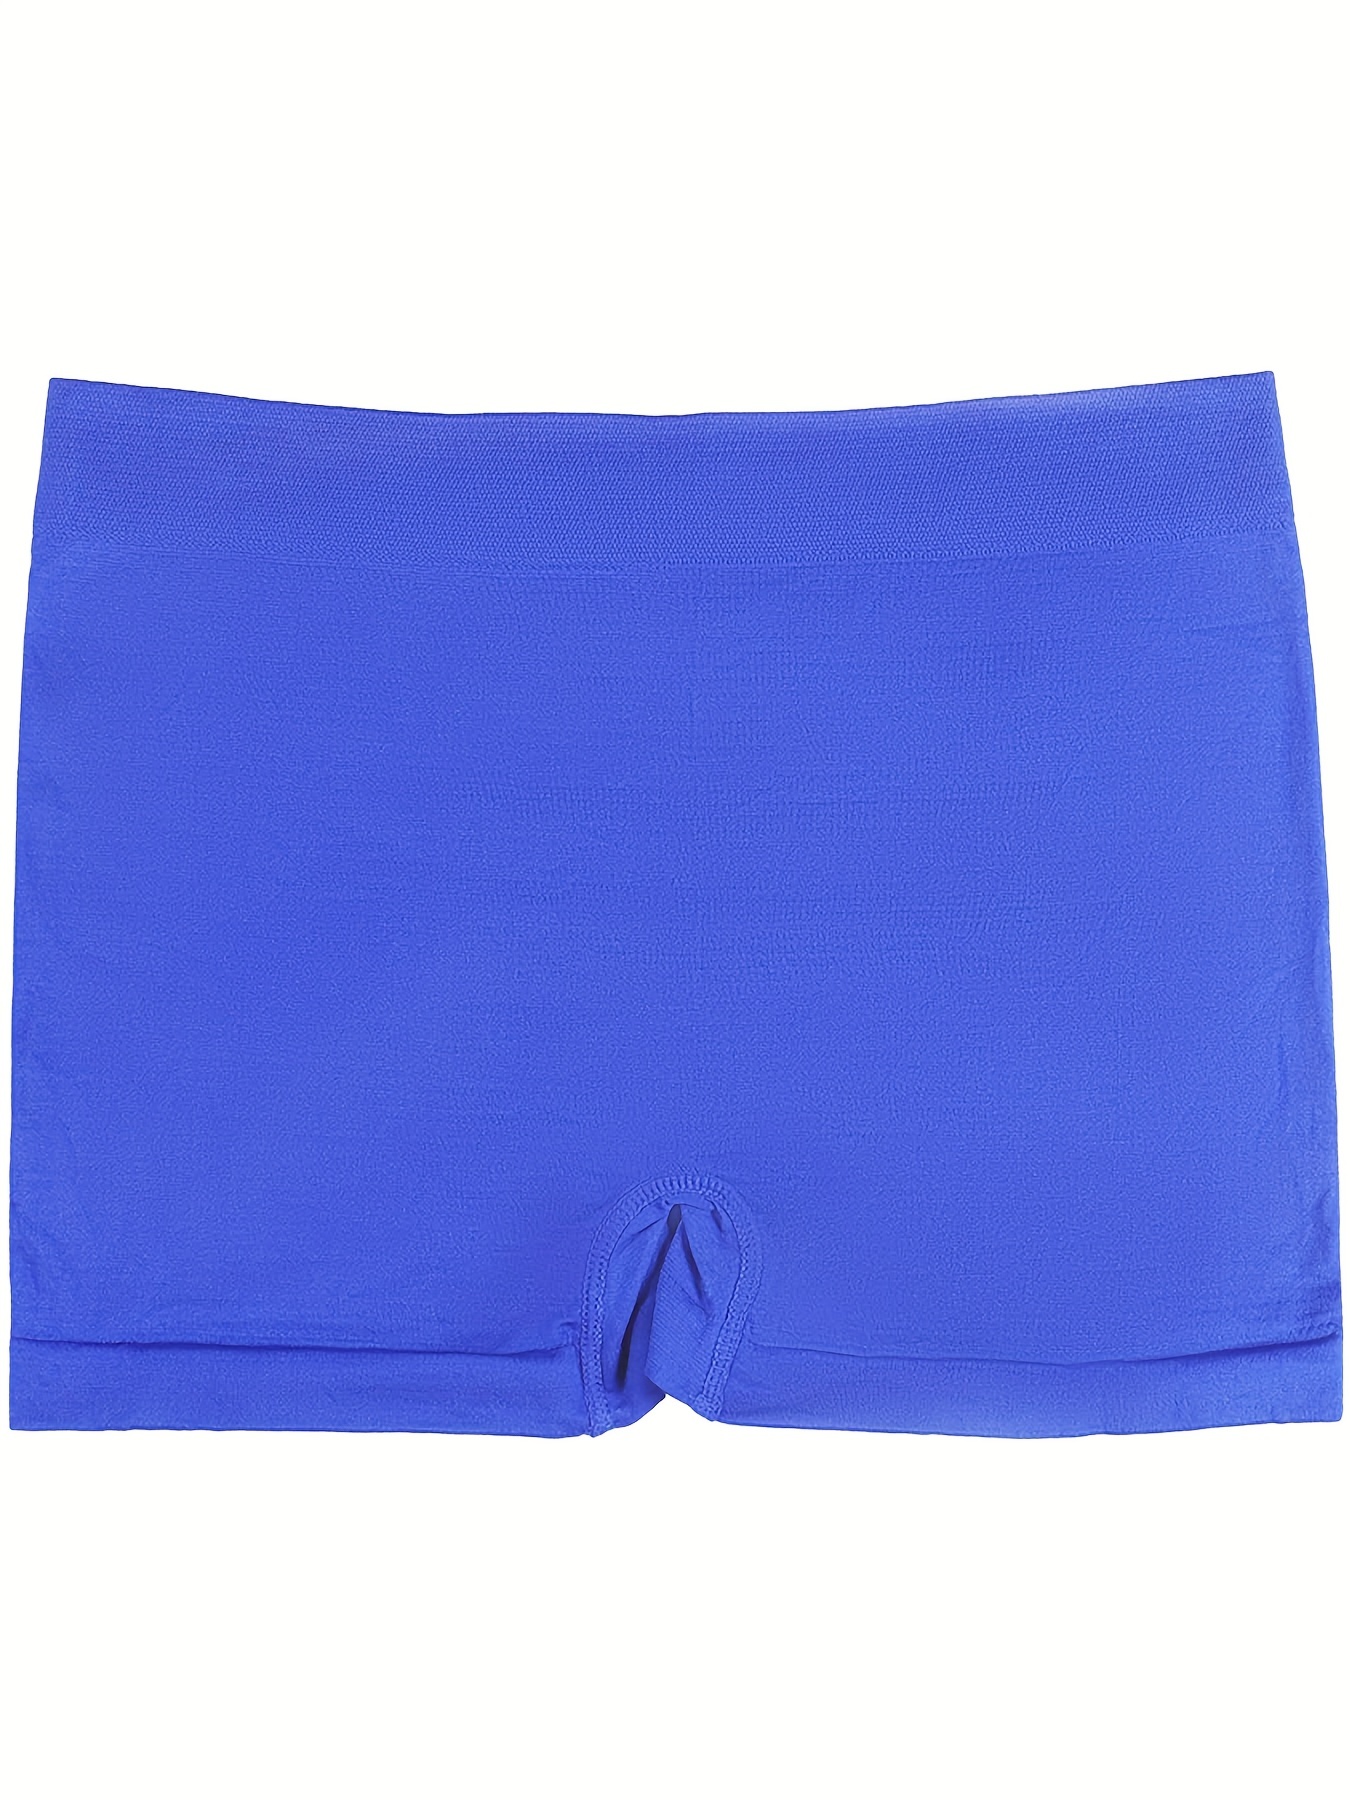 6 Girl's Children Kids Underwear Panties Seamless Boxer Short Mixed Colors  S M L